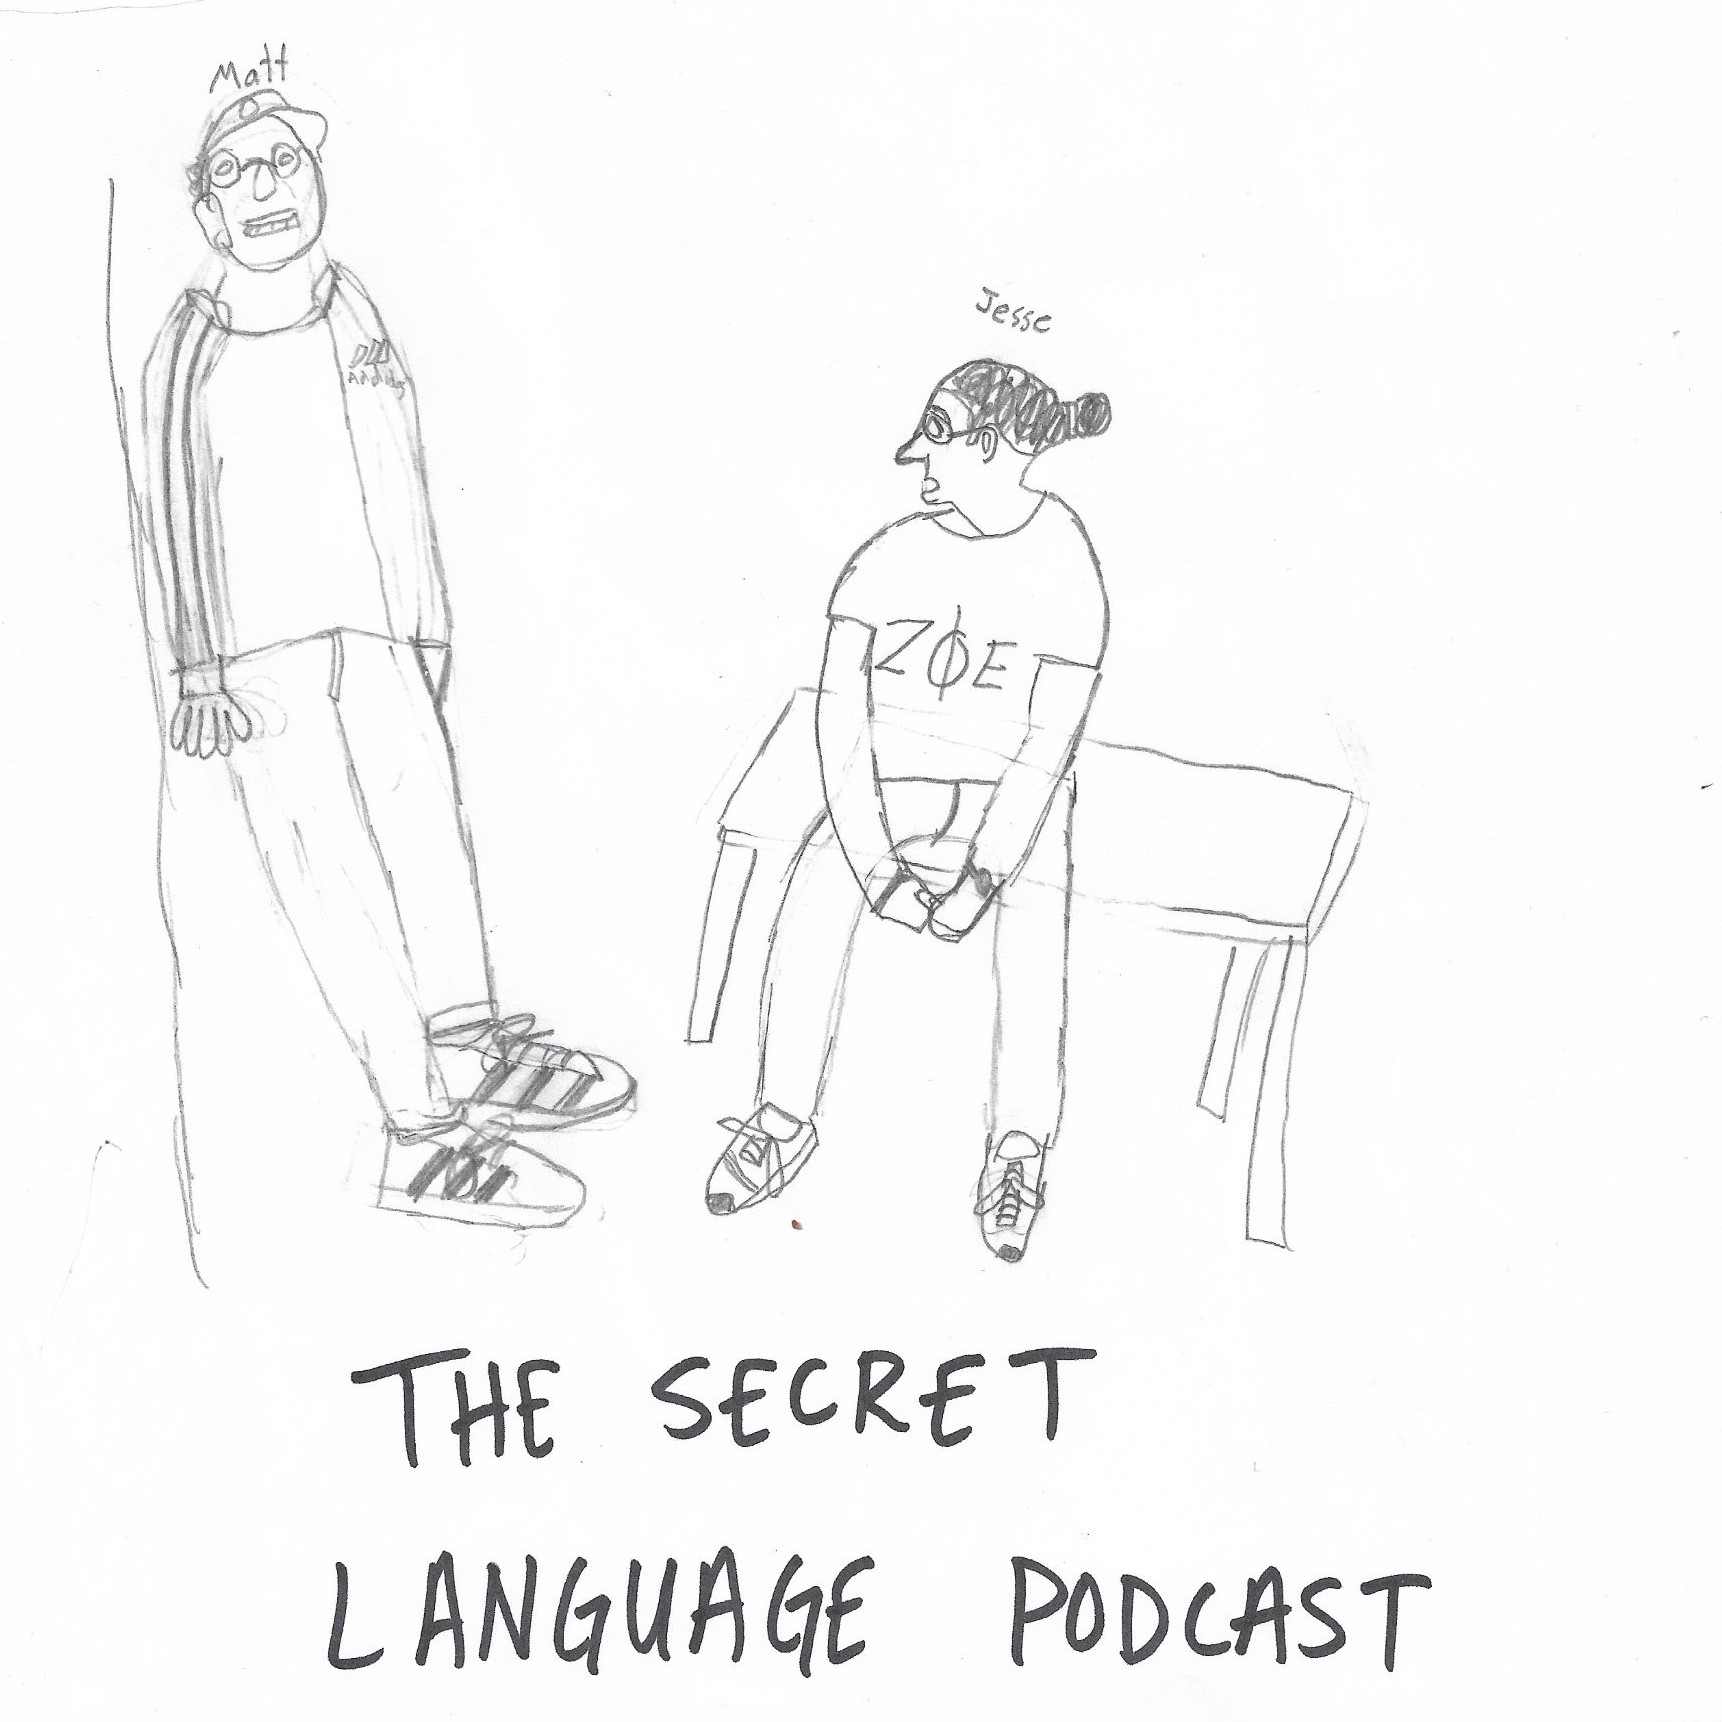 The Secret Language Podcast